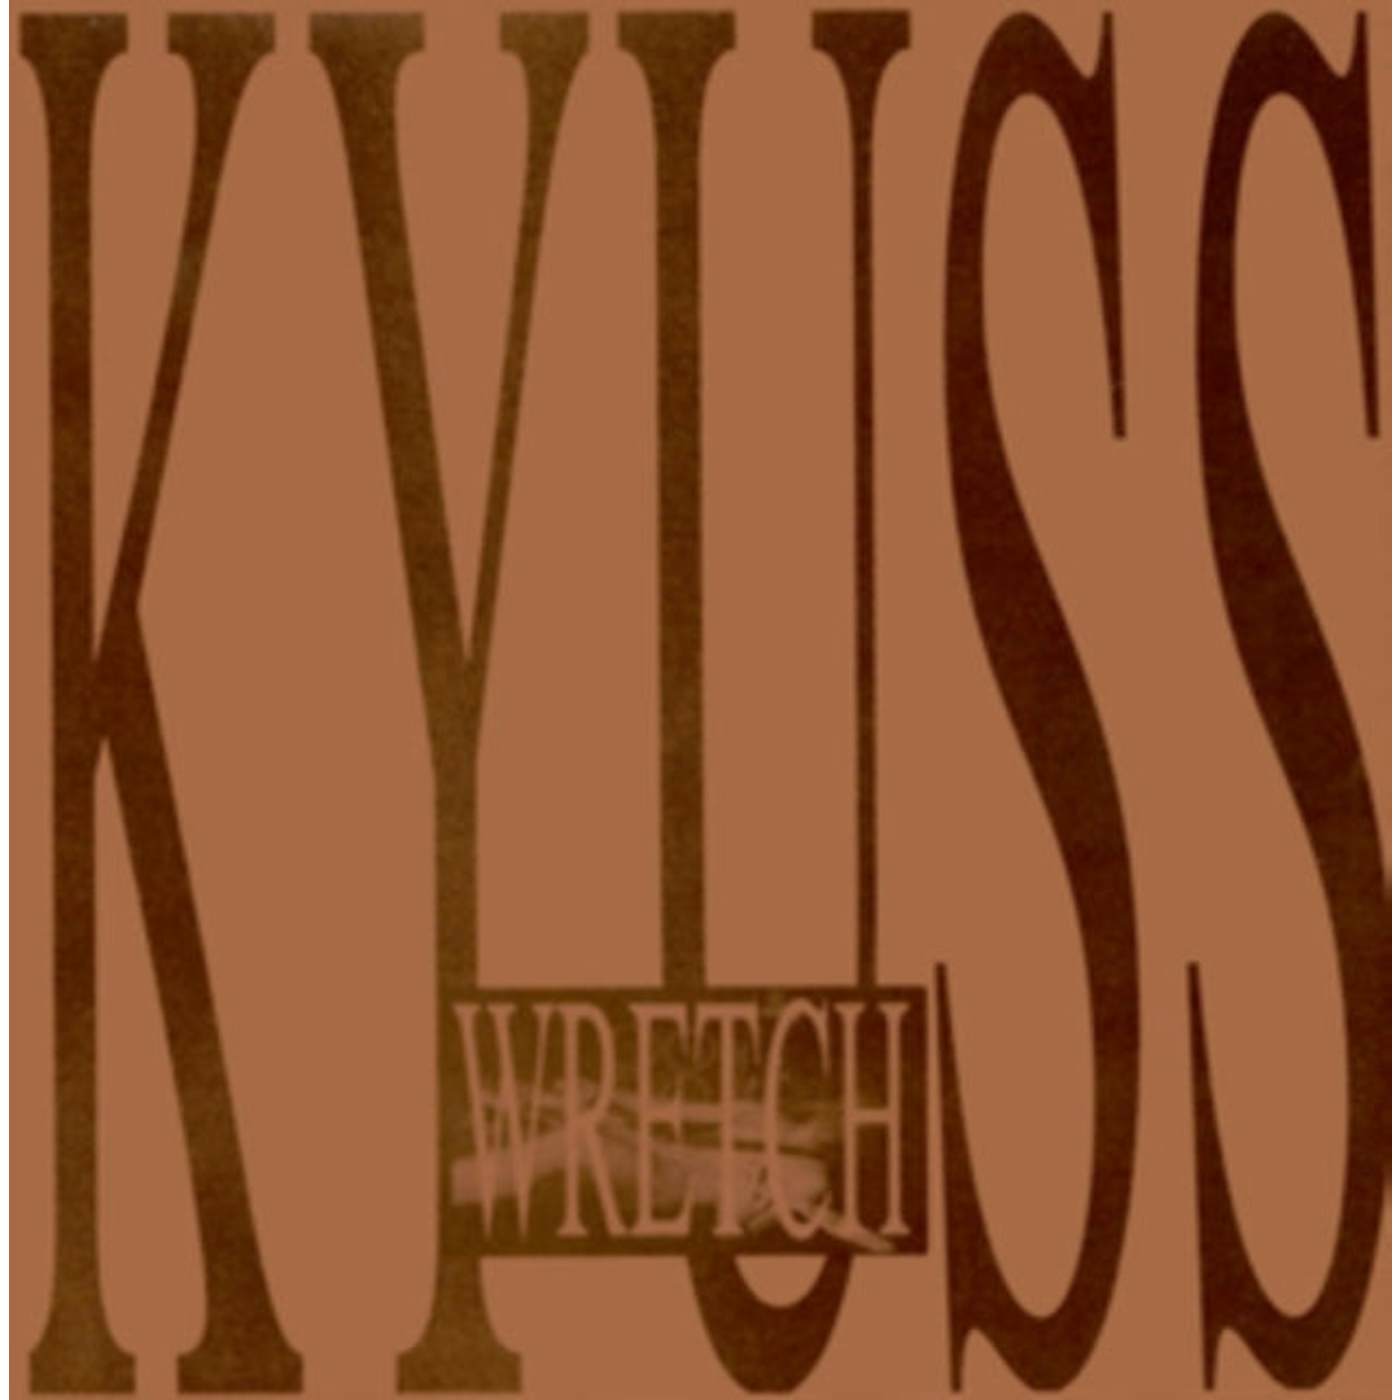 Kyuss CD - Wretch